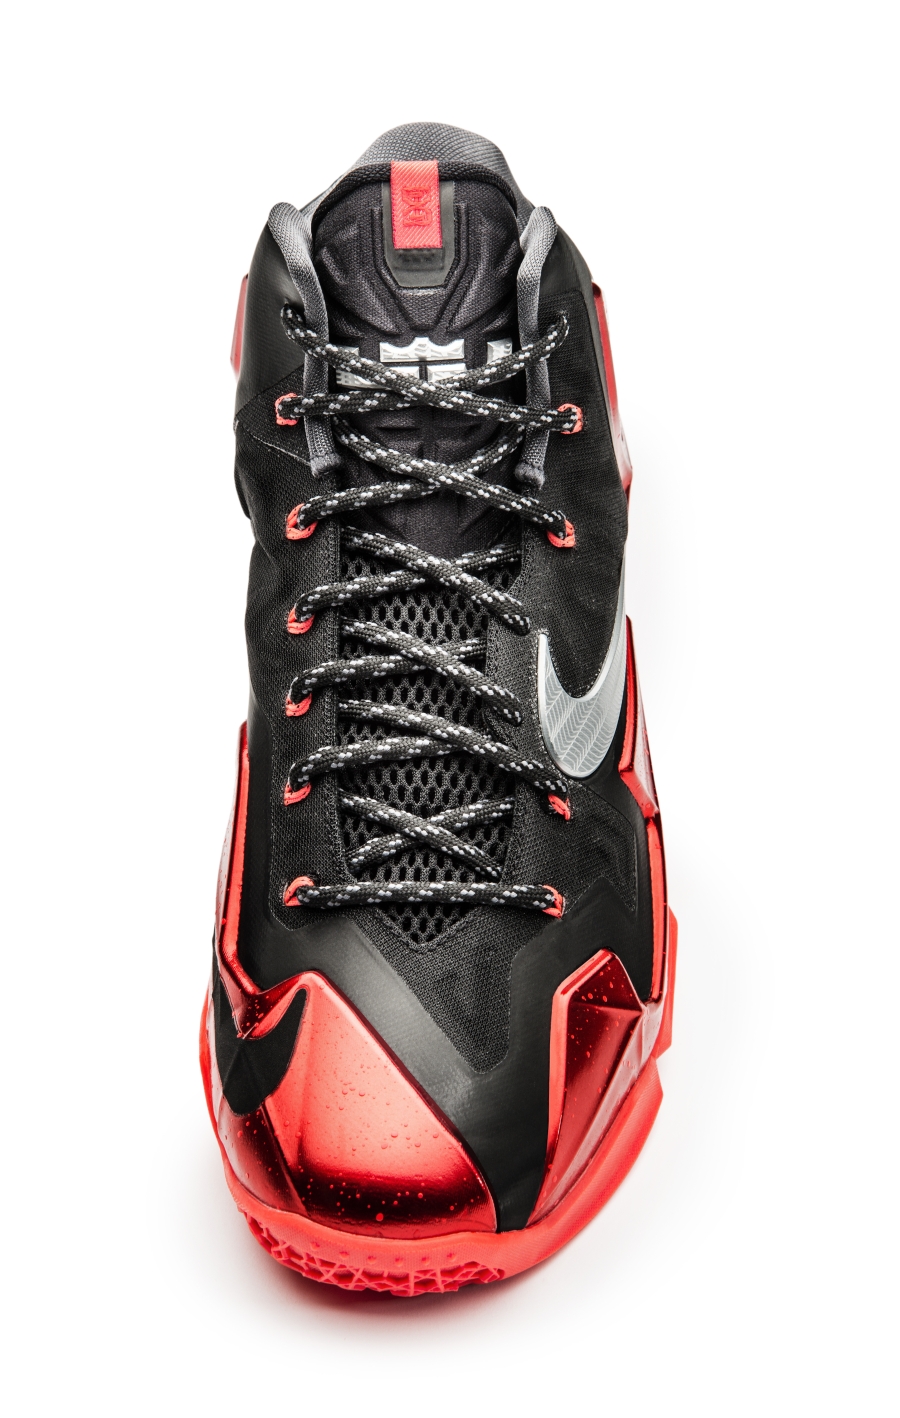 Nike Lebron 11 Black Red Release Date 08